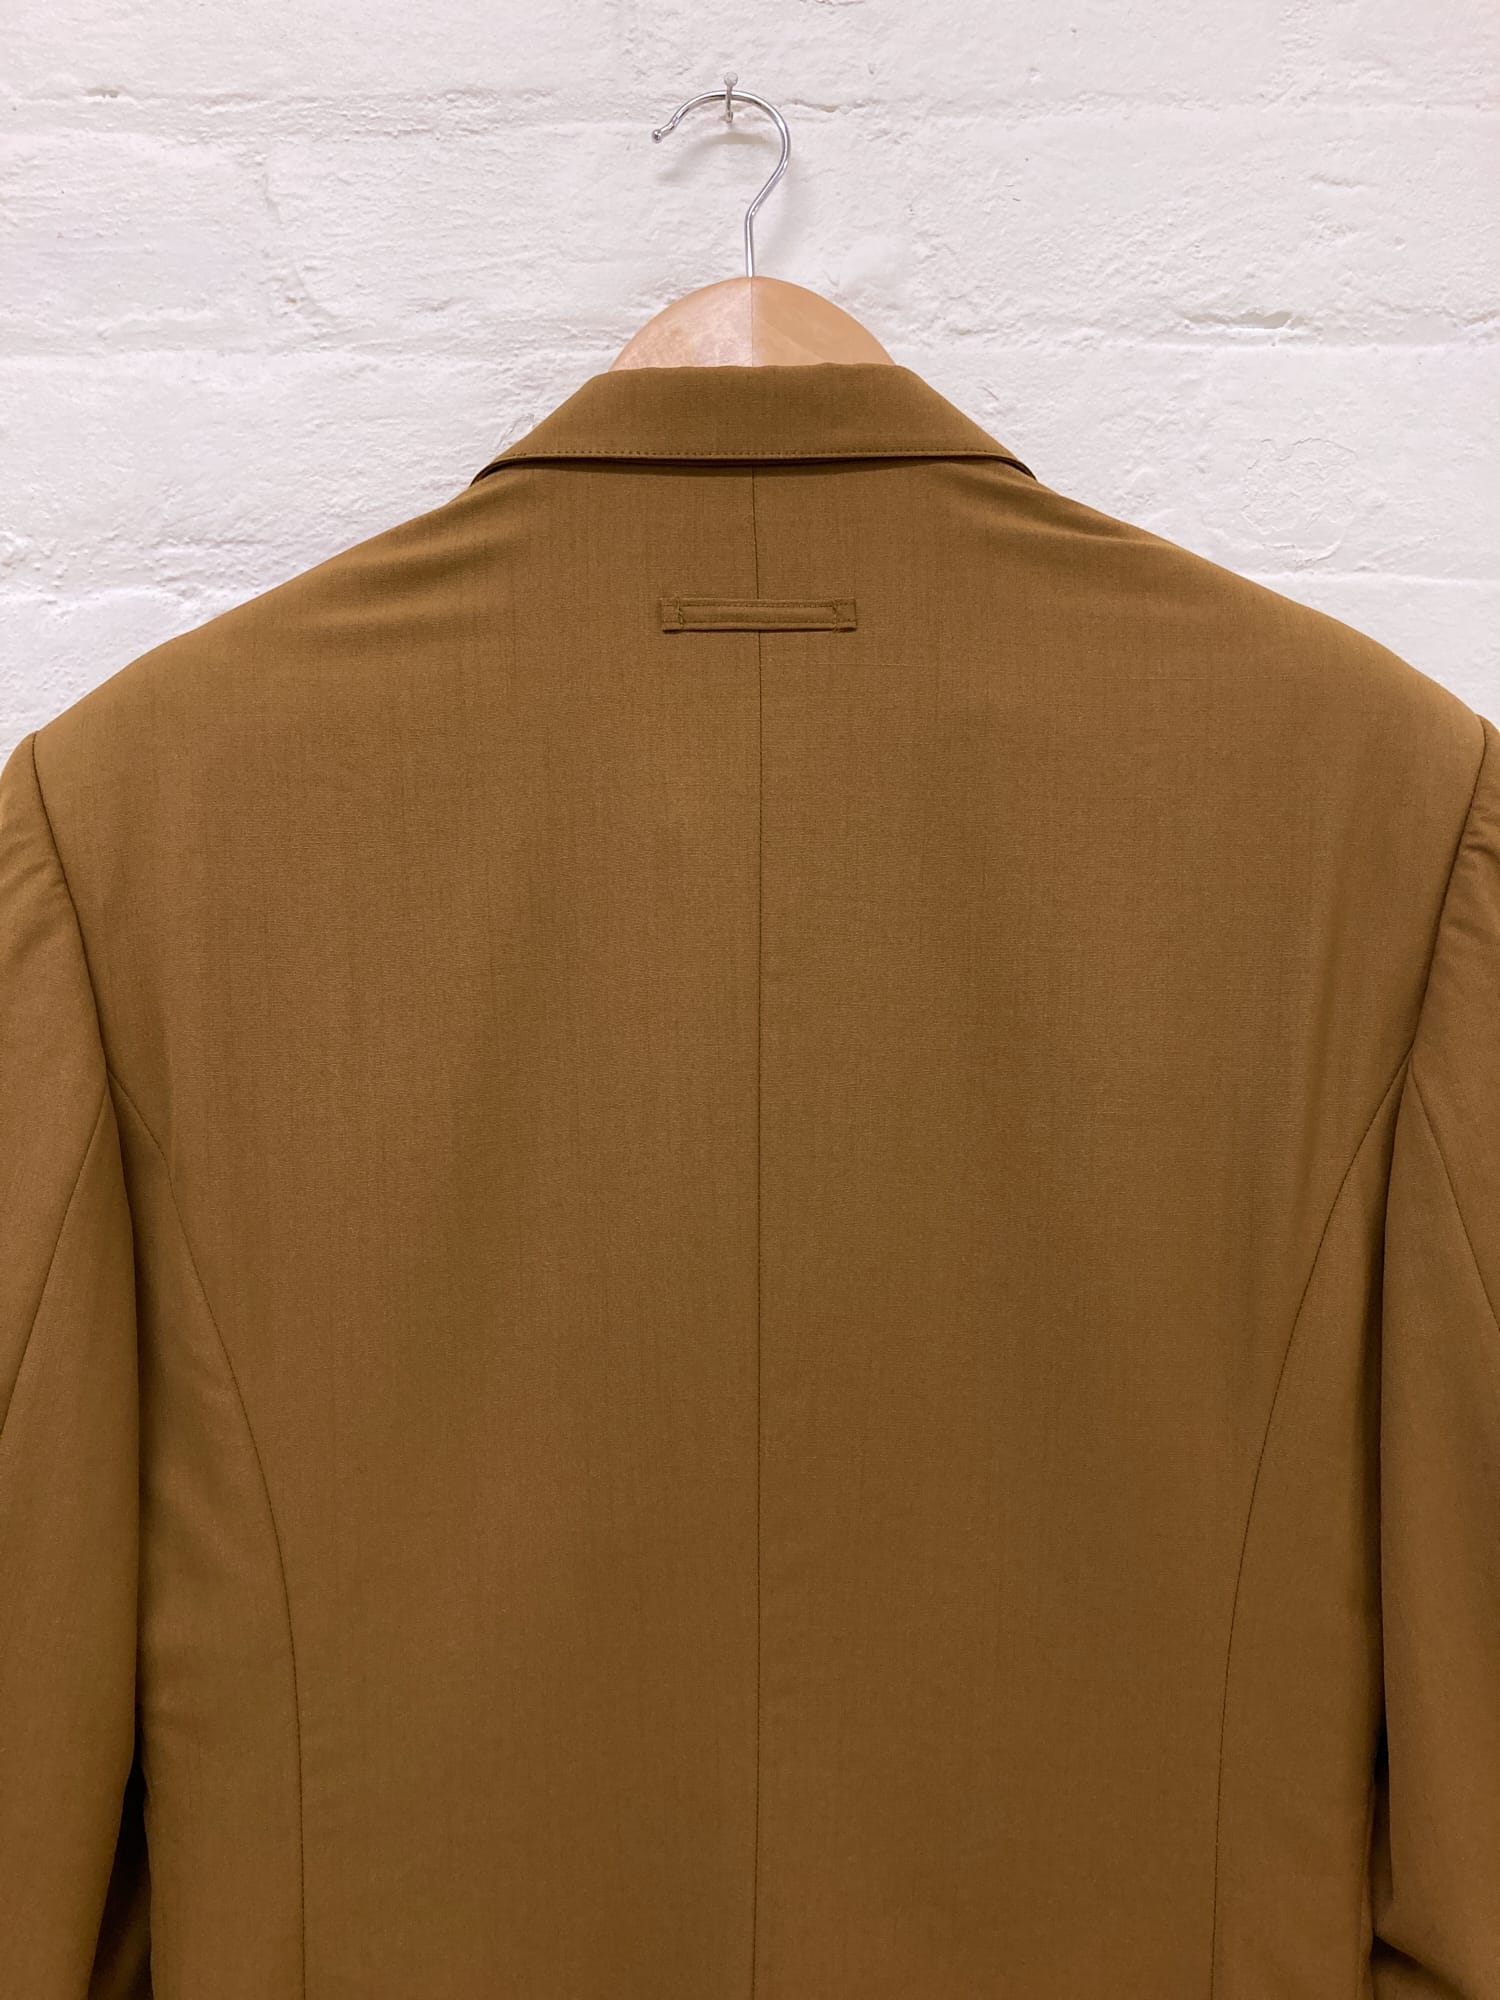 Jean Paul Gaultier Homme 1990s mustard wool three button trouser suit